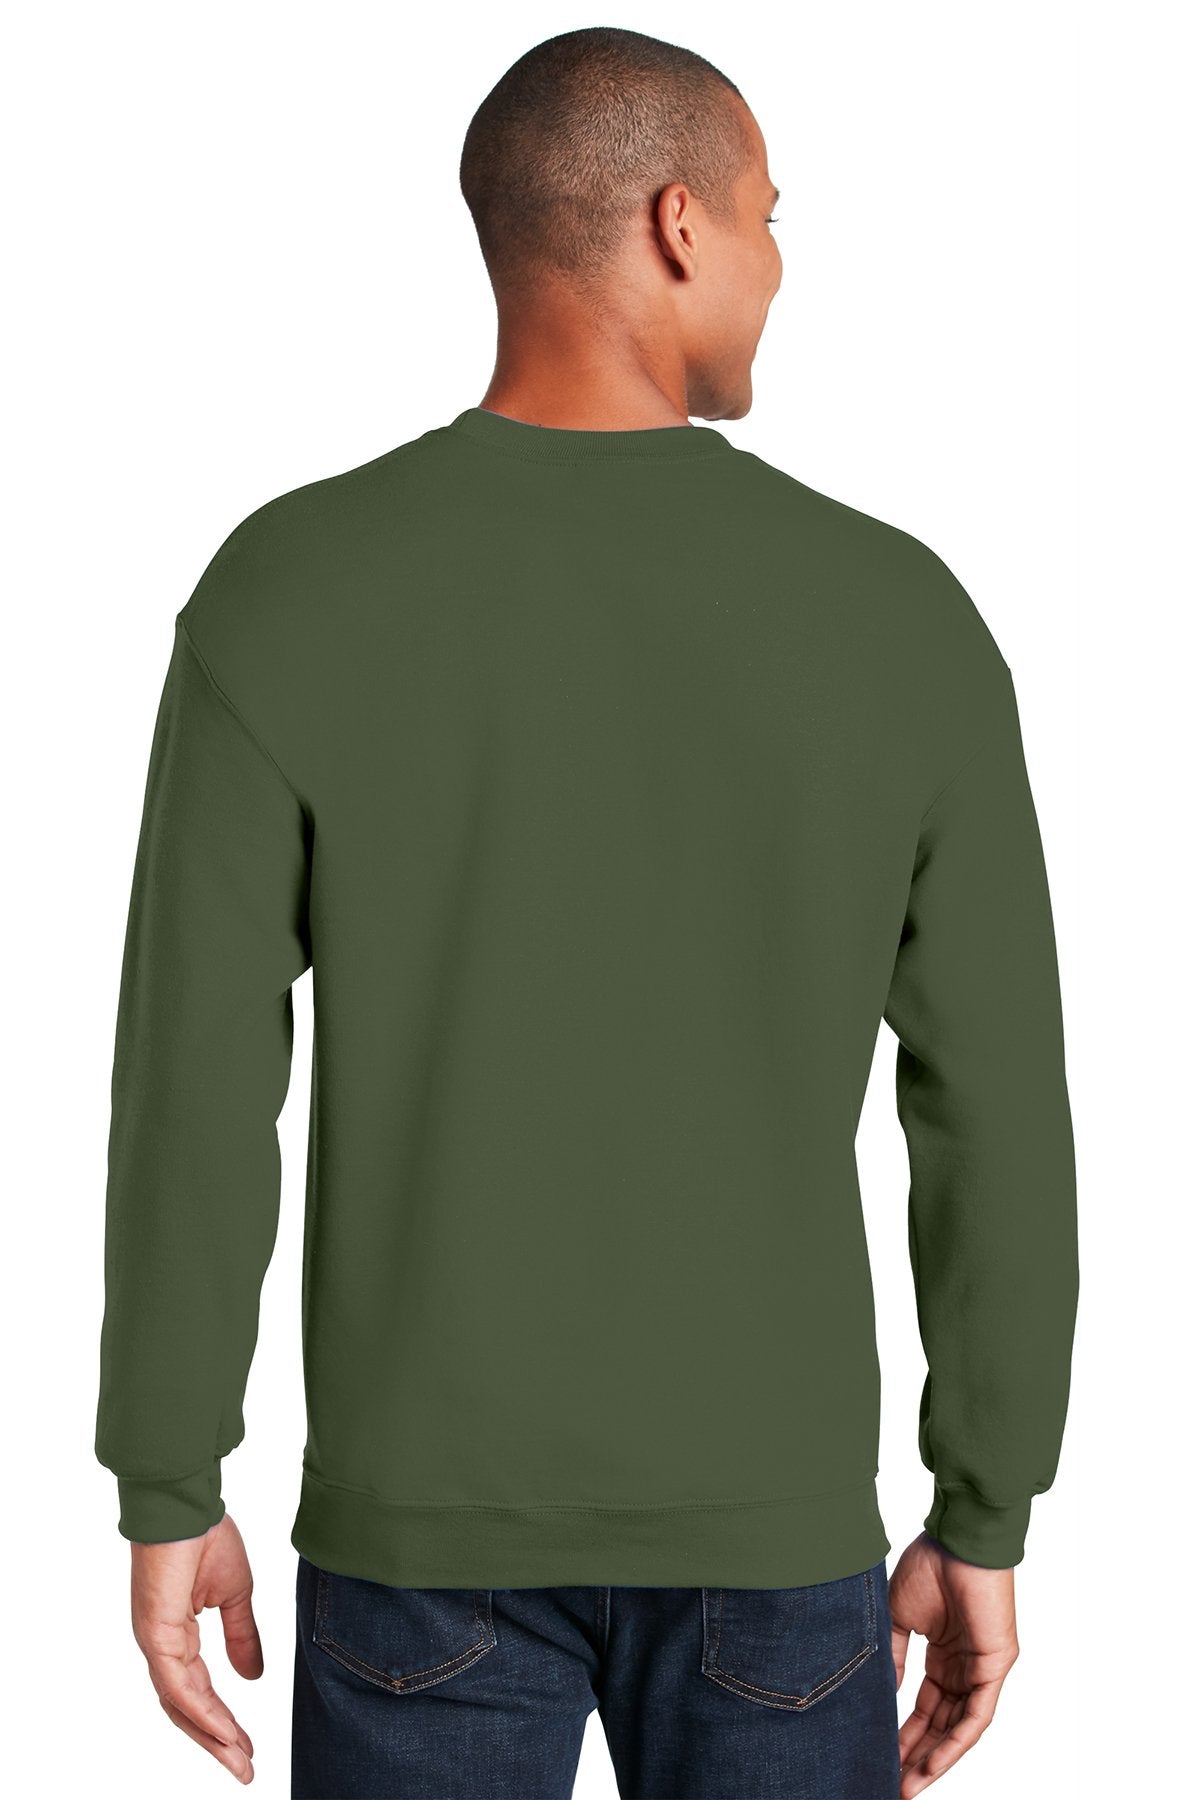 Gildan Heavy Blend Crewneck Sweatshirt Military Green